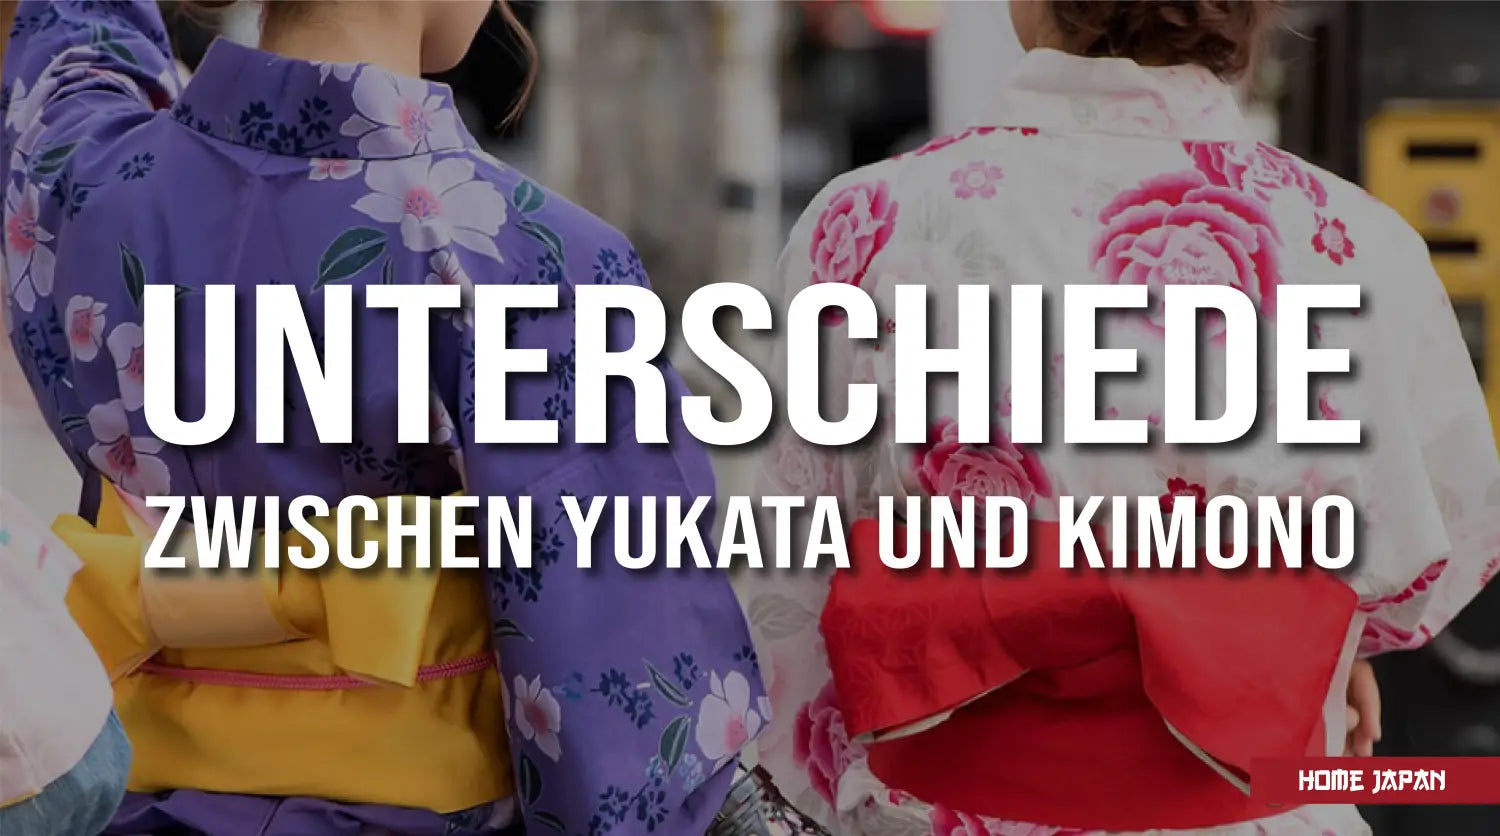 yukata und kimono unterschied